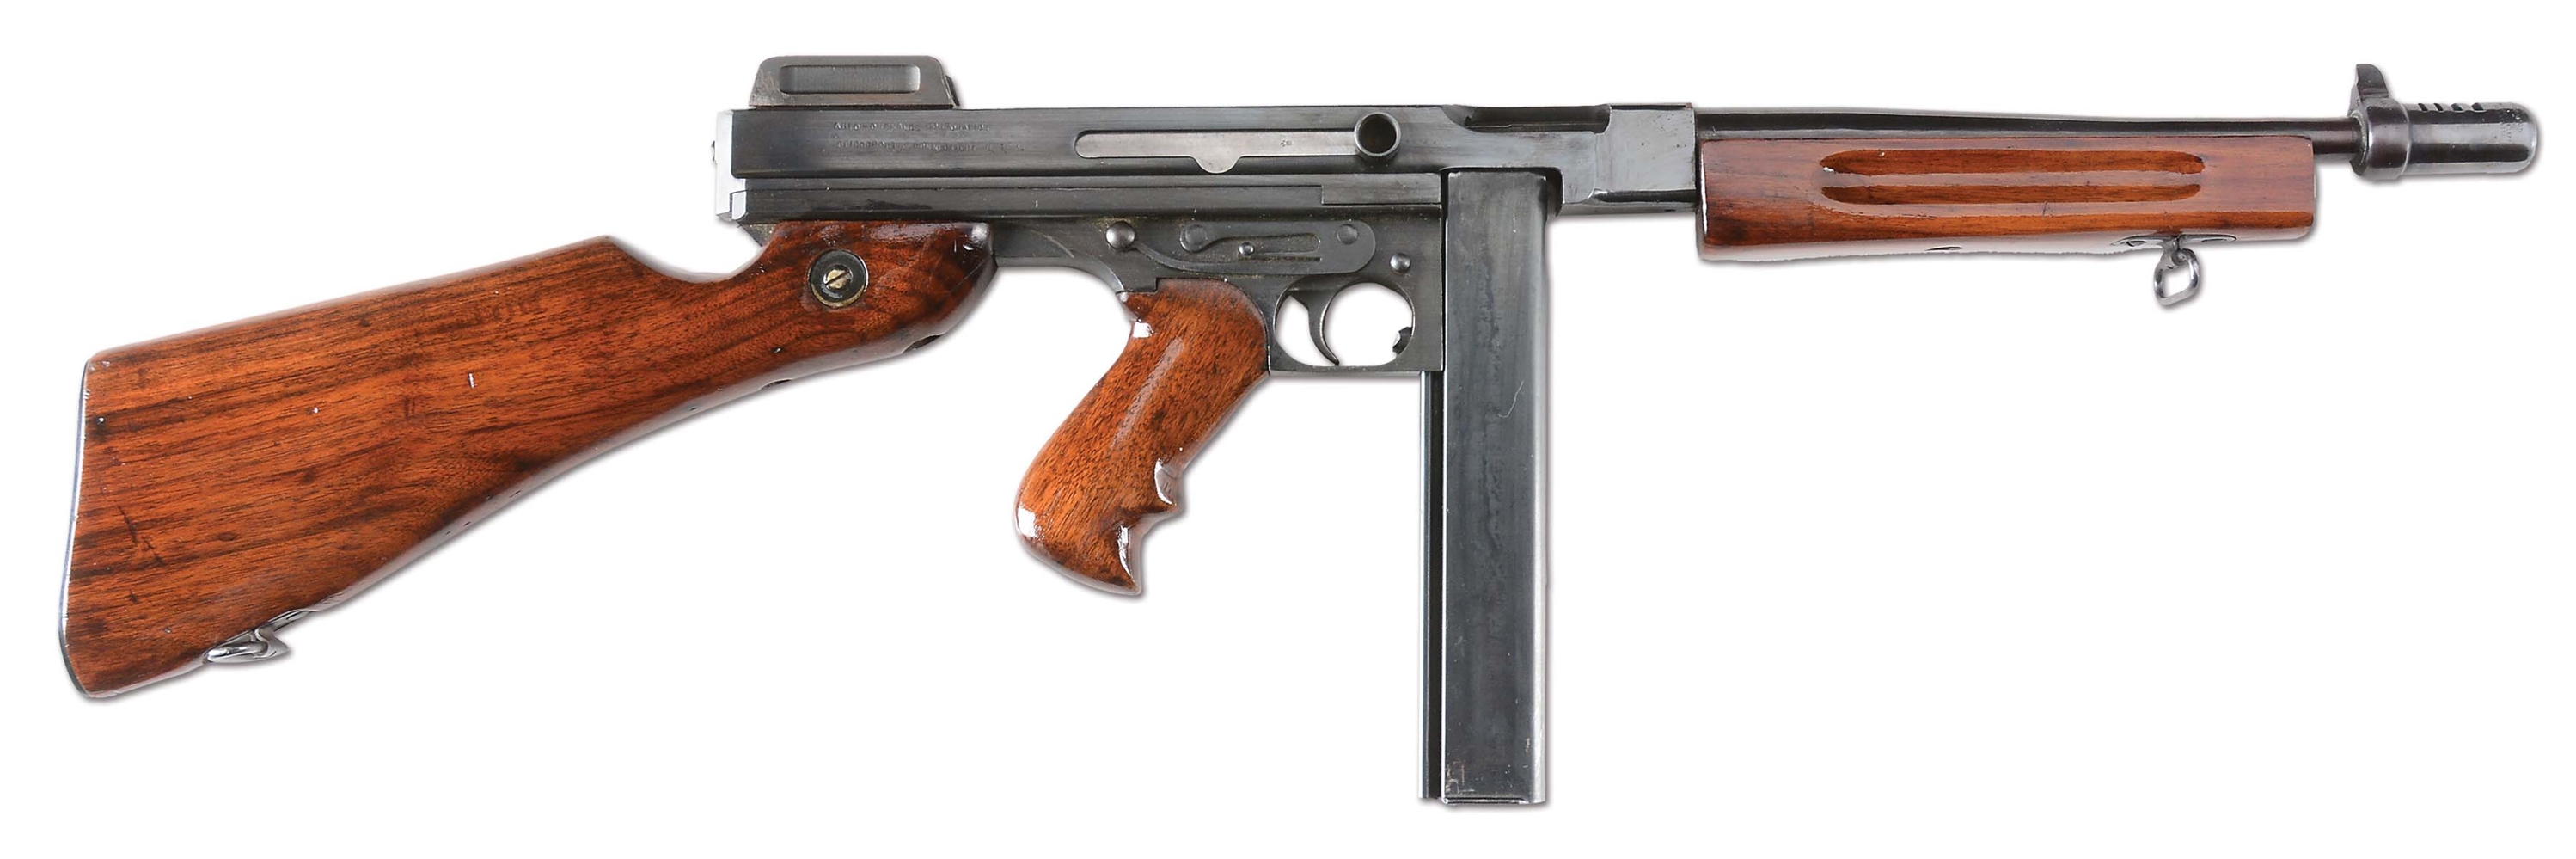 (N) AUTO ORDNANCE THOMPSON M1A1 MACHINE GUN AS REACTIVATED BY MARANA ARMS (FULLY TRANSFERABLE).